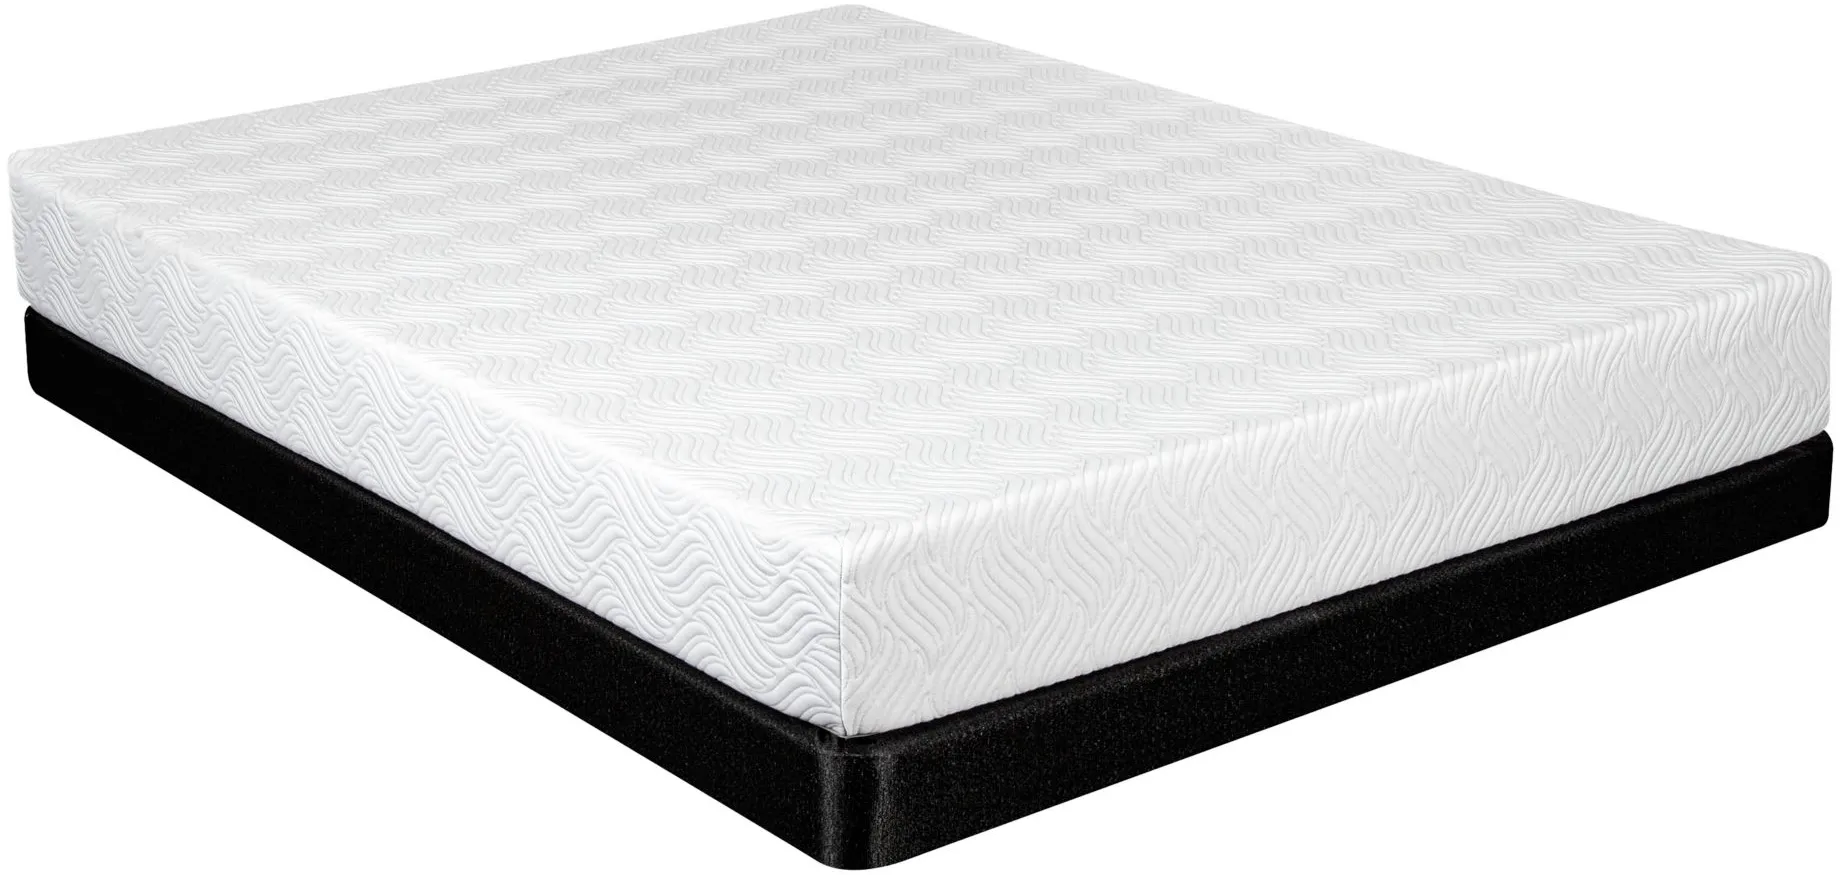 bellanest imperial euro top twin mattress